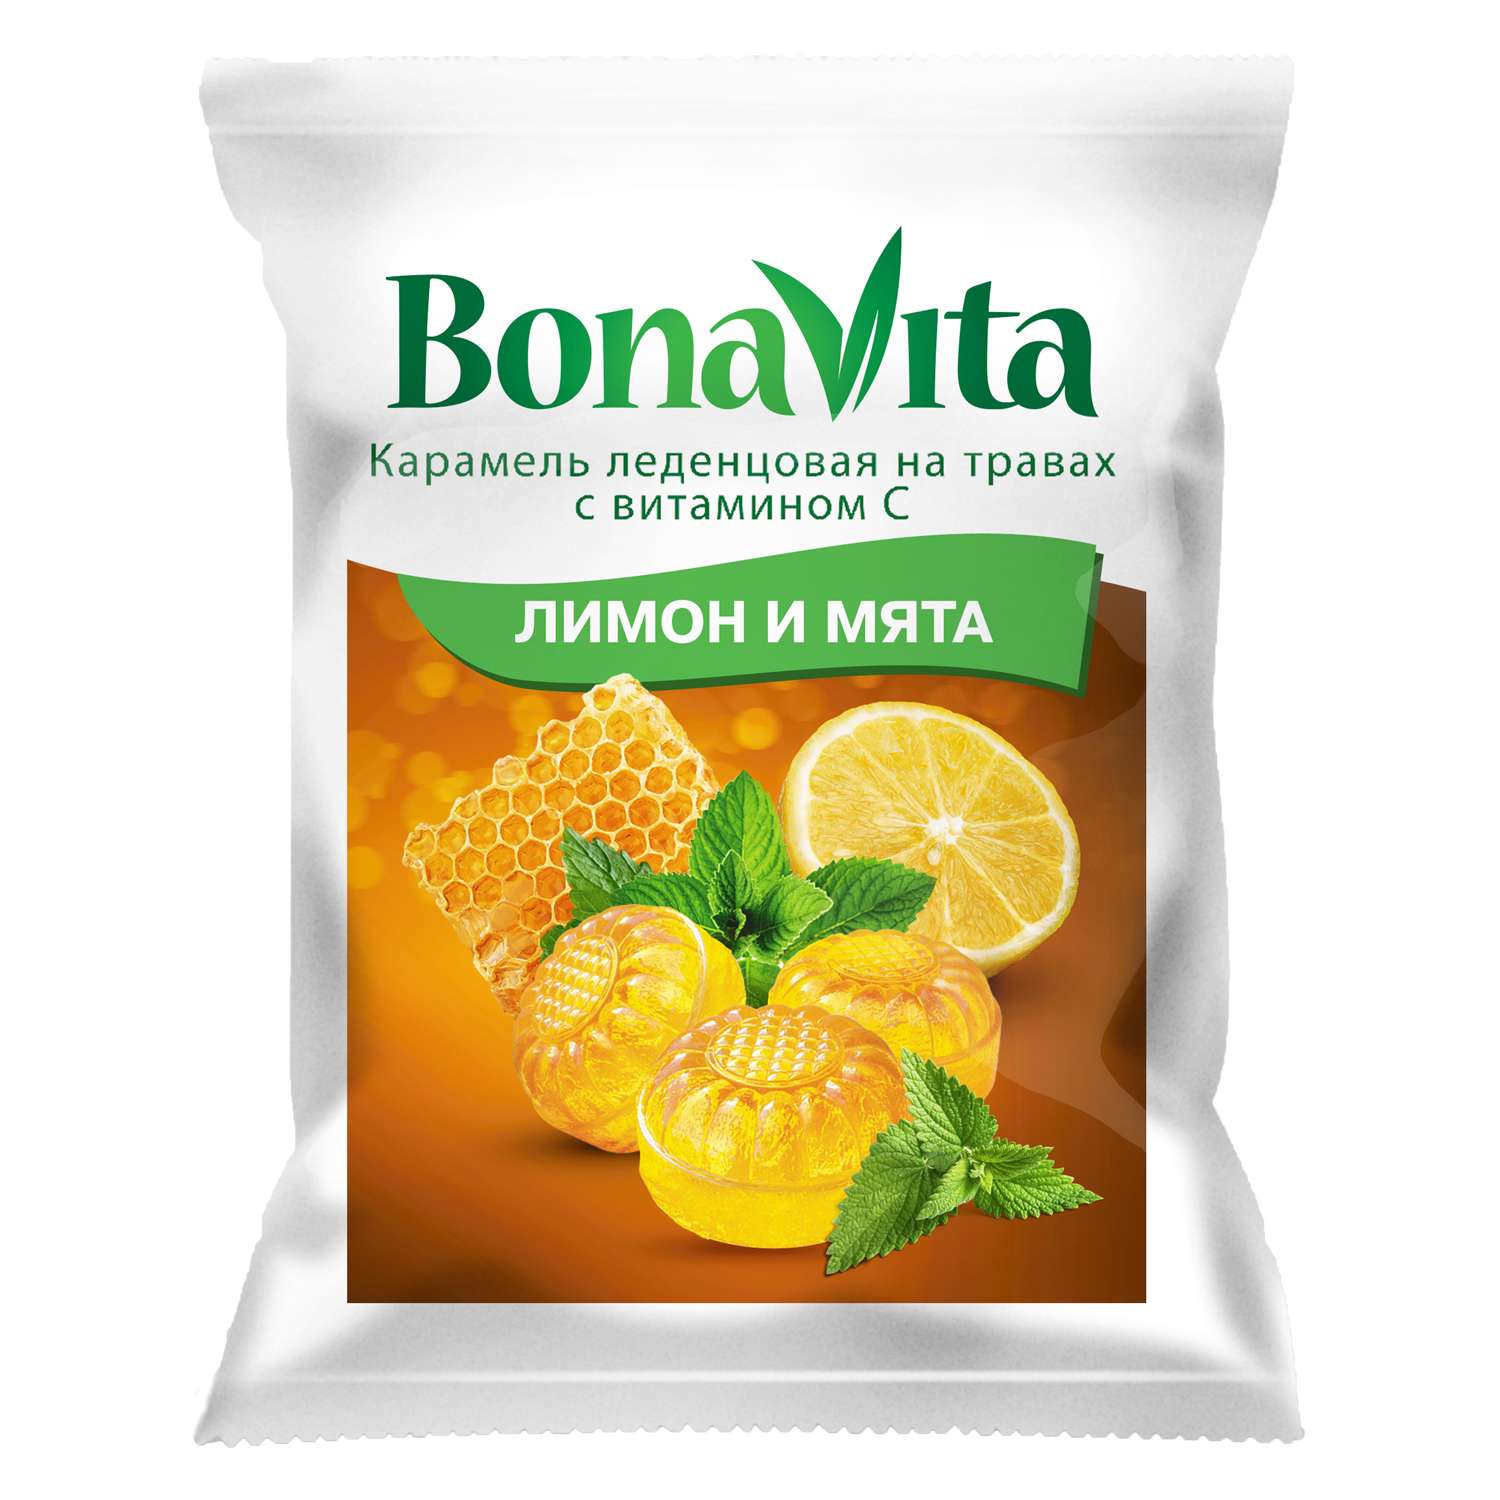 Биологически активная добавка Карамель BonaVita леденцовая лимон и мята с витамином С на травах 60г - фото 1